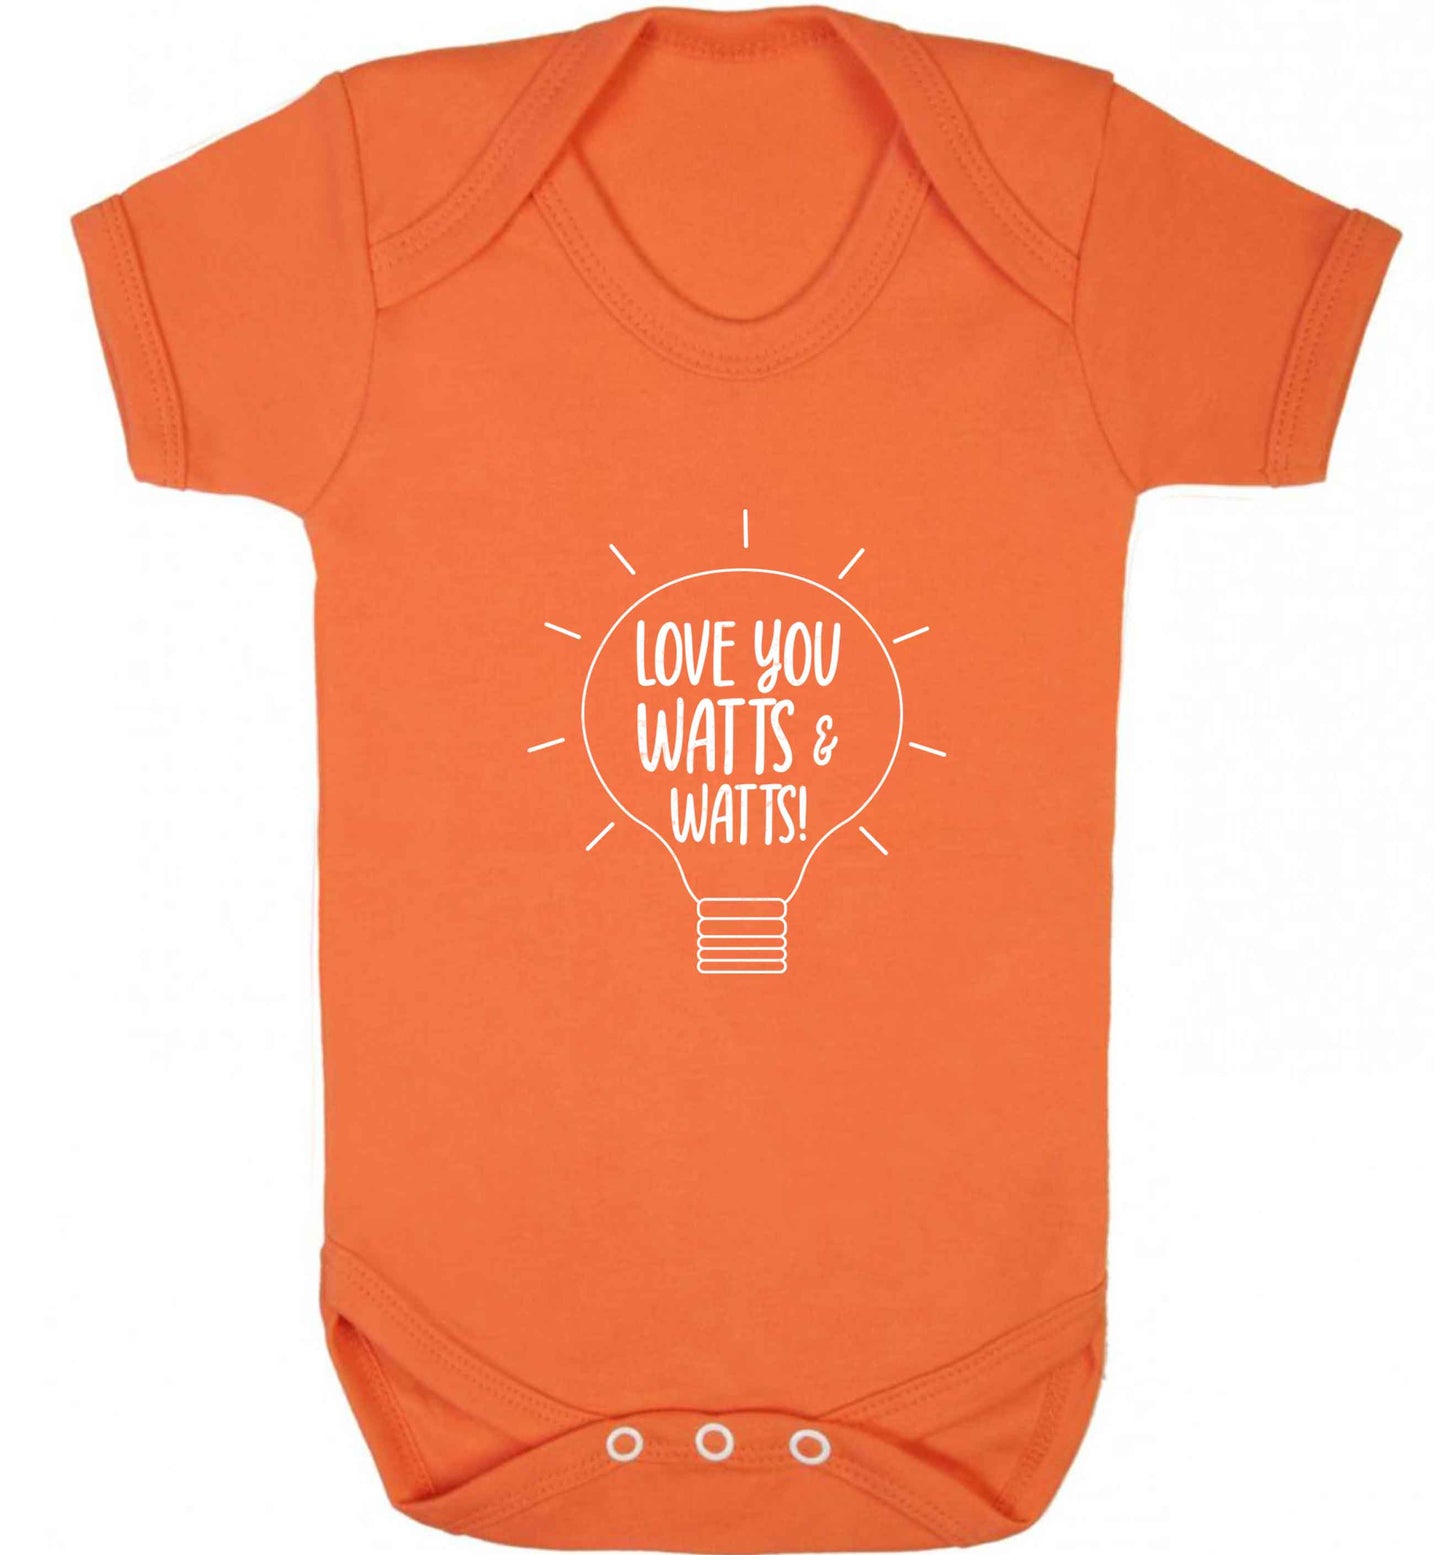 I love you watts and watts baby vest orange 18-24 months